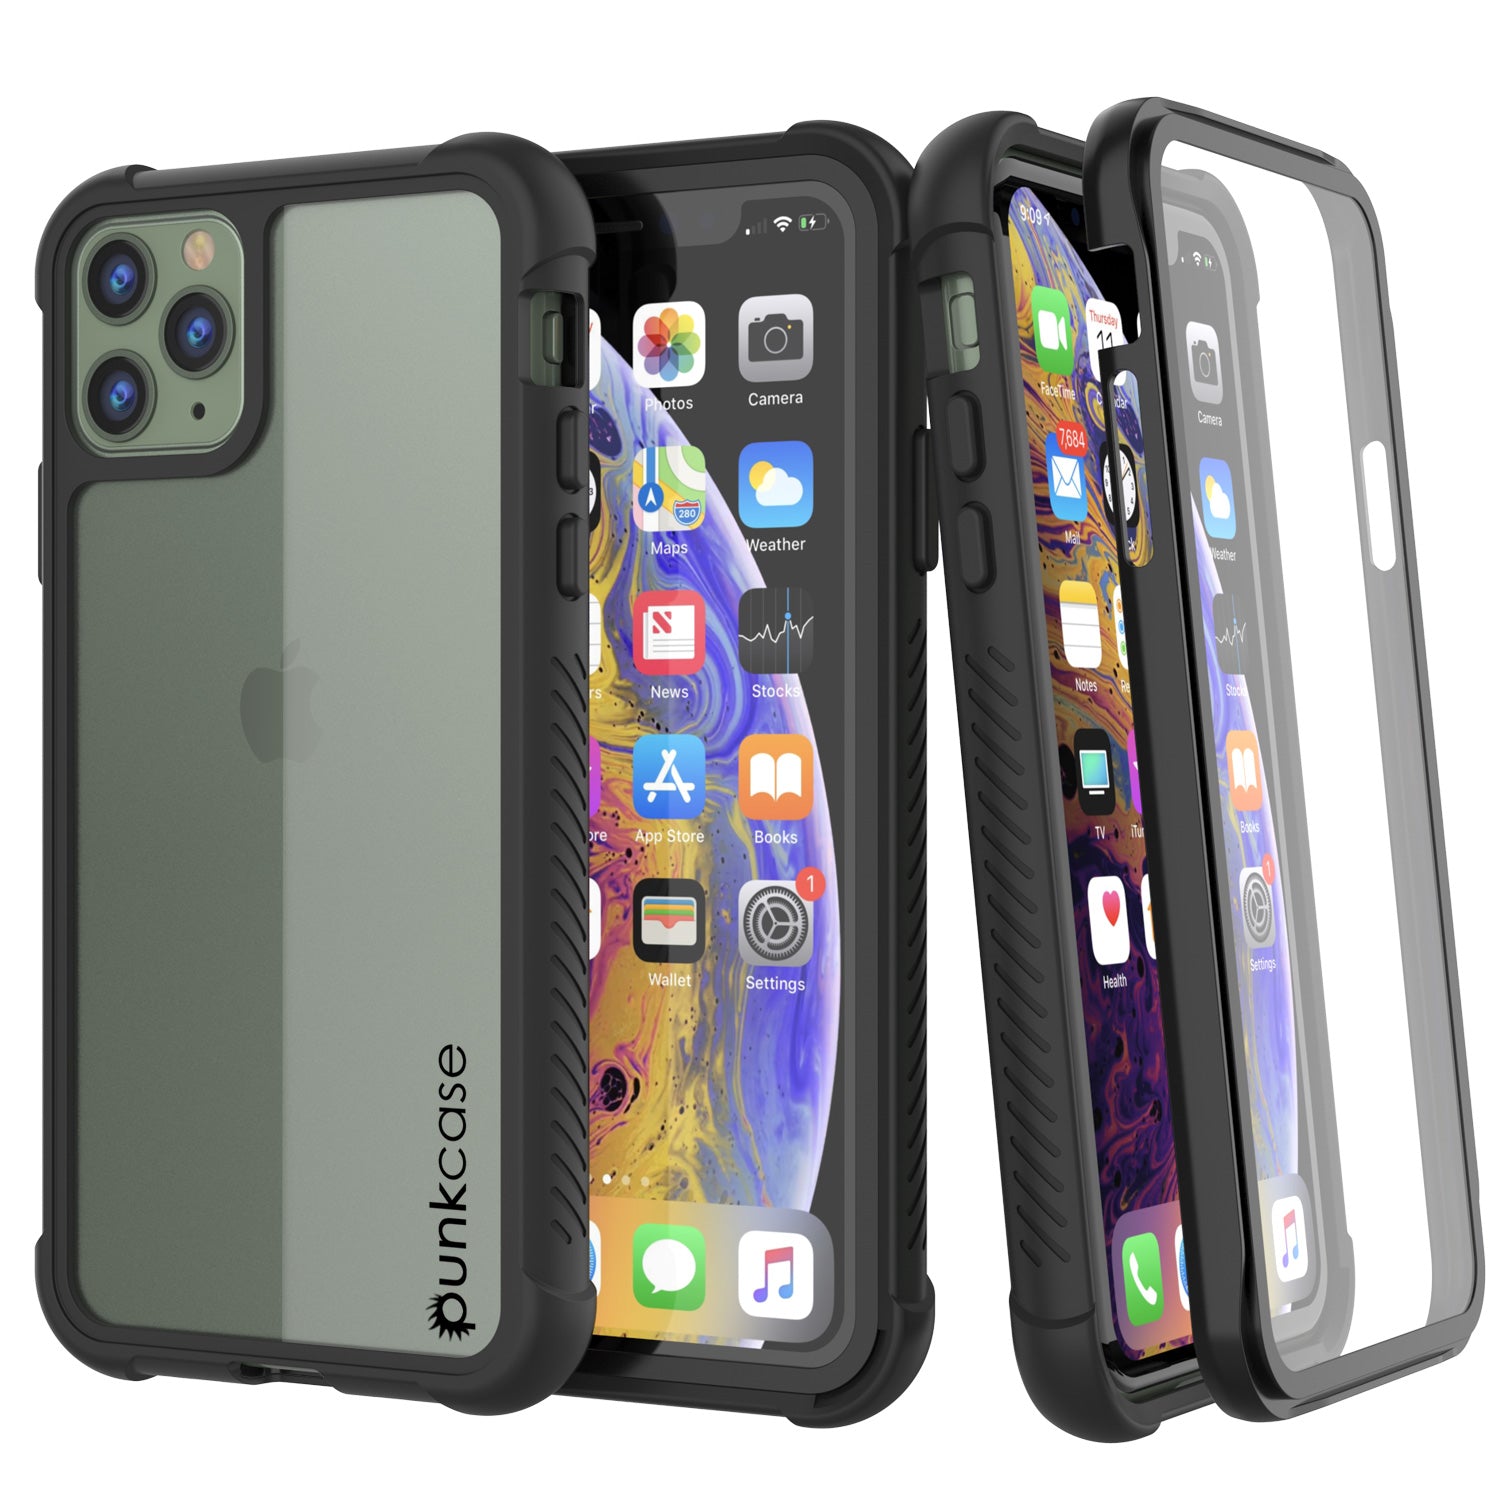 Supreme IPhone 11 Pro protective case $100